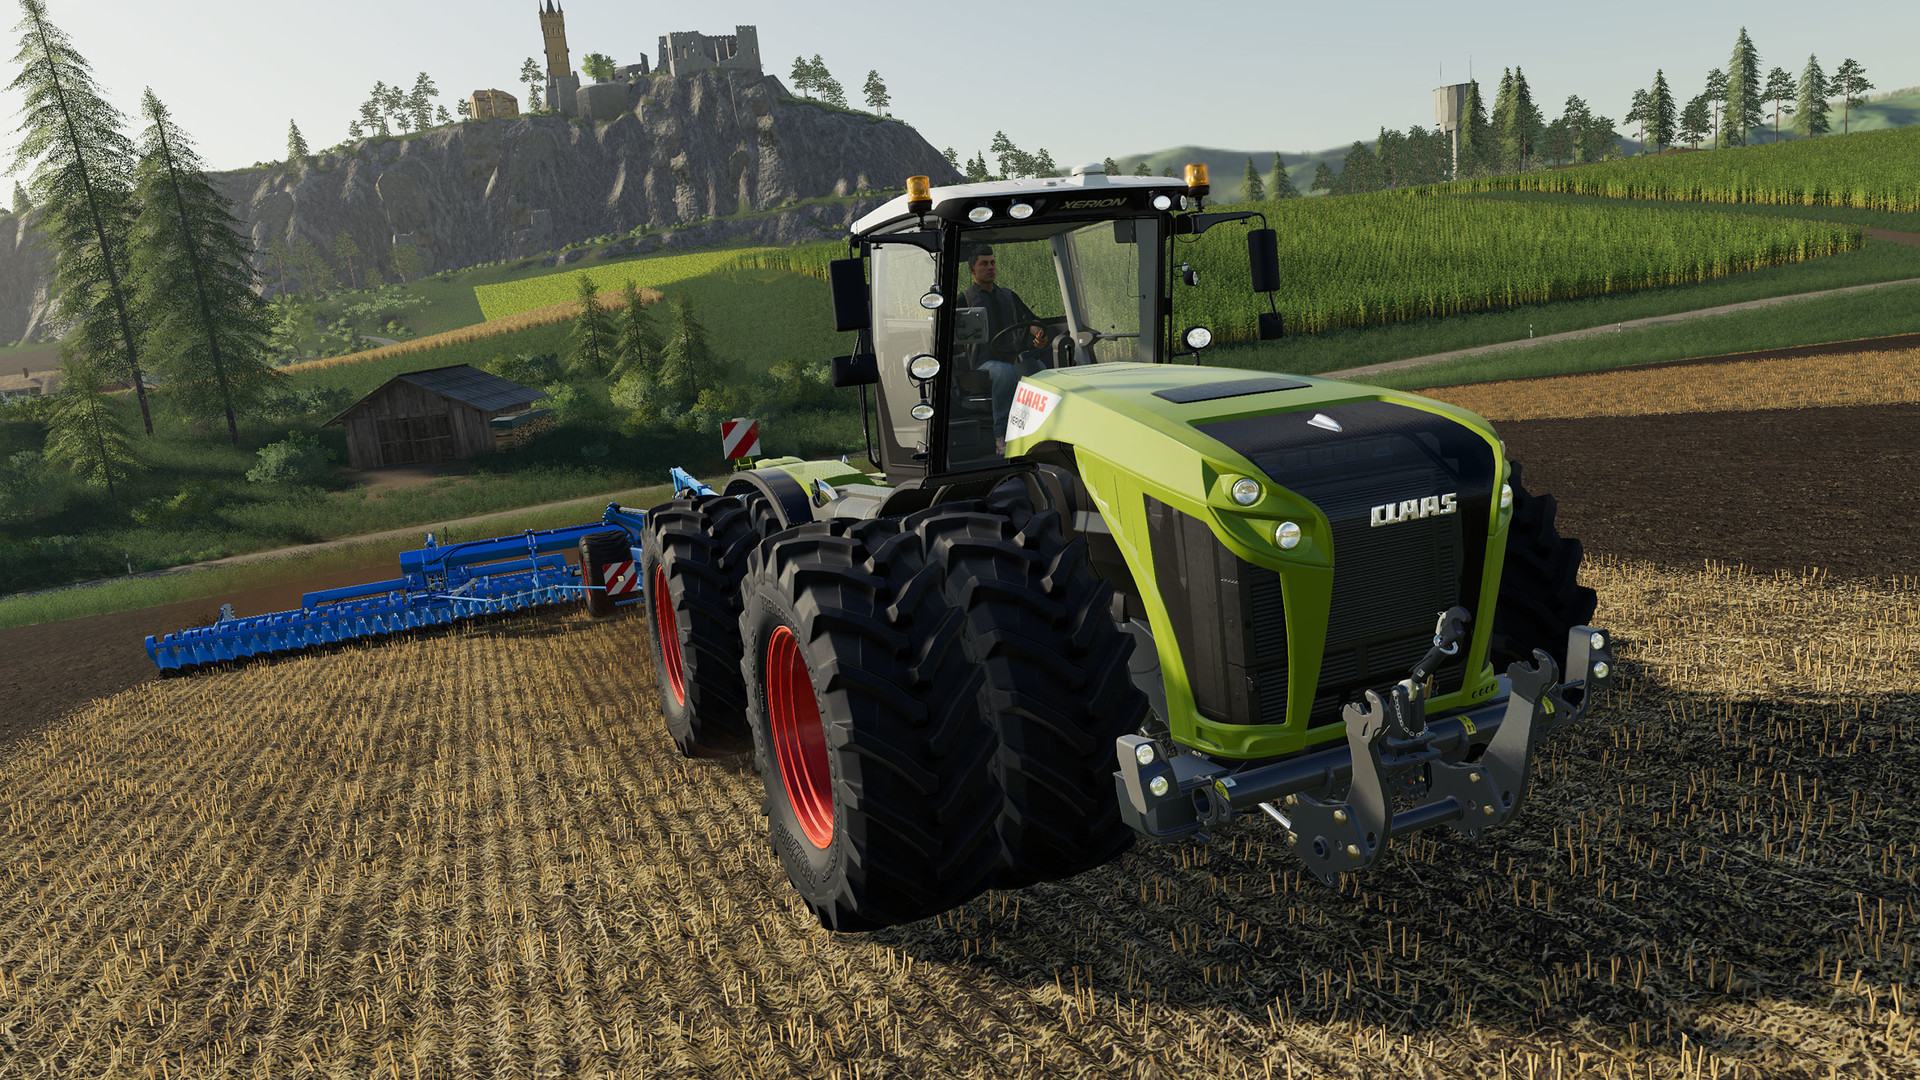 download farming simulator 2013 steam for free